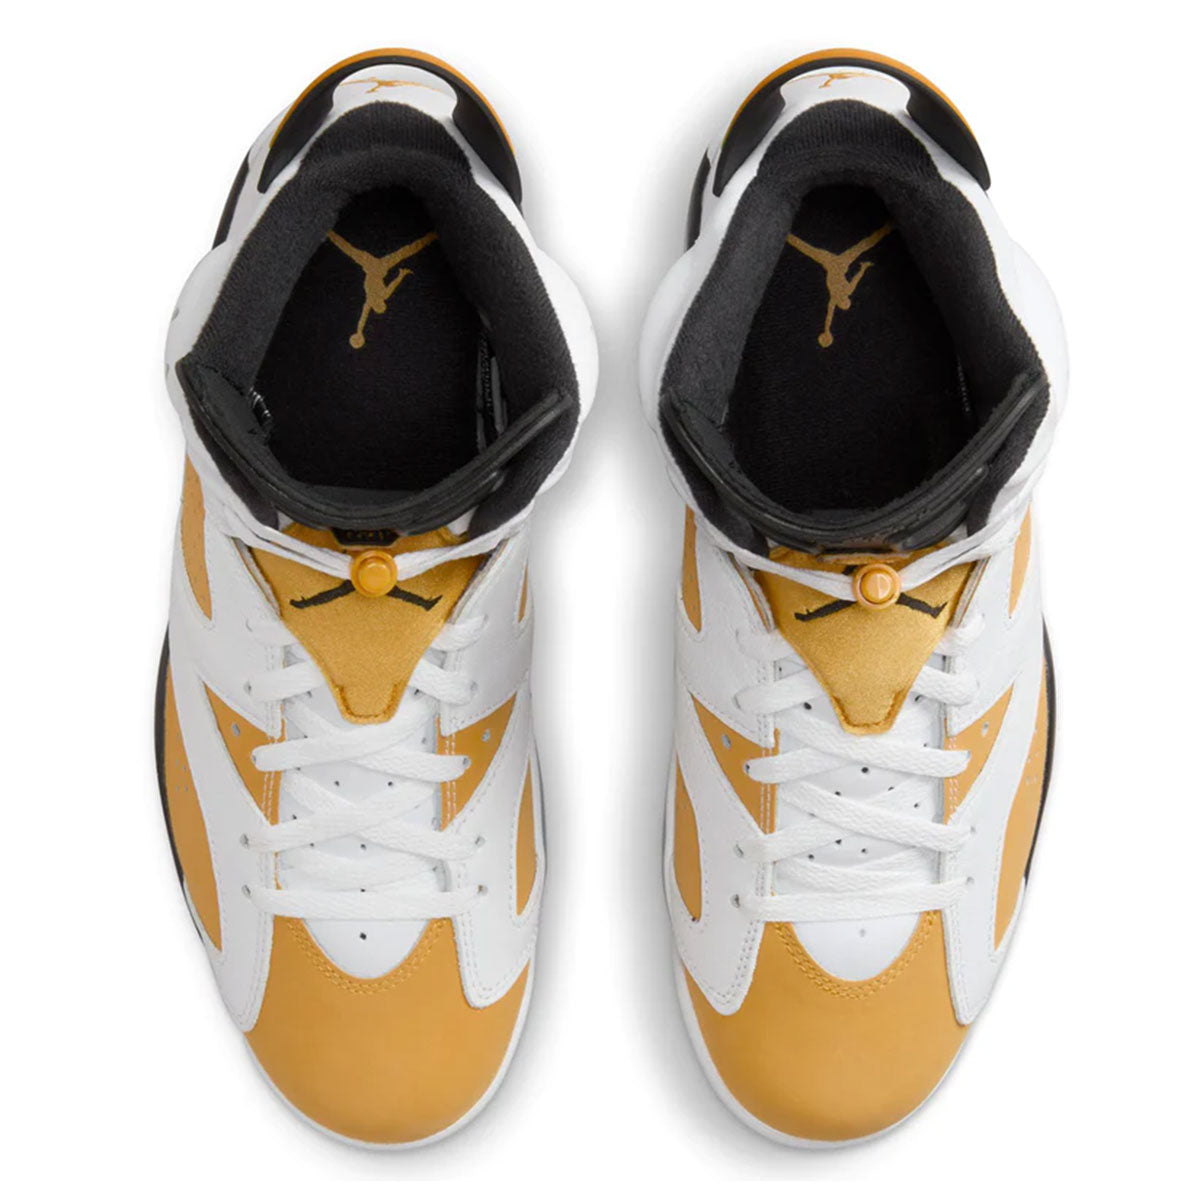 NIKE AIR JORDAN 6 RETRO (WHITE/YELLOW OCHRE-BLACK) Nike Air Jordan 6 Retro "Yellow Ochre" [CT8529-170]